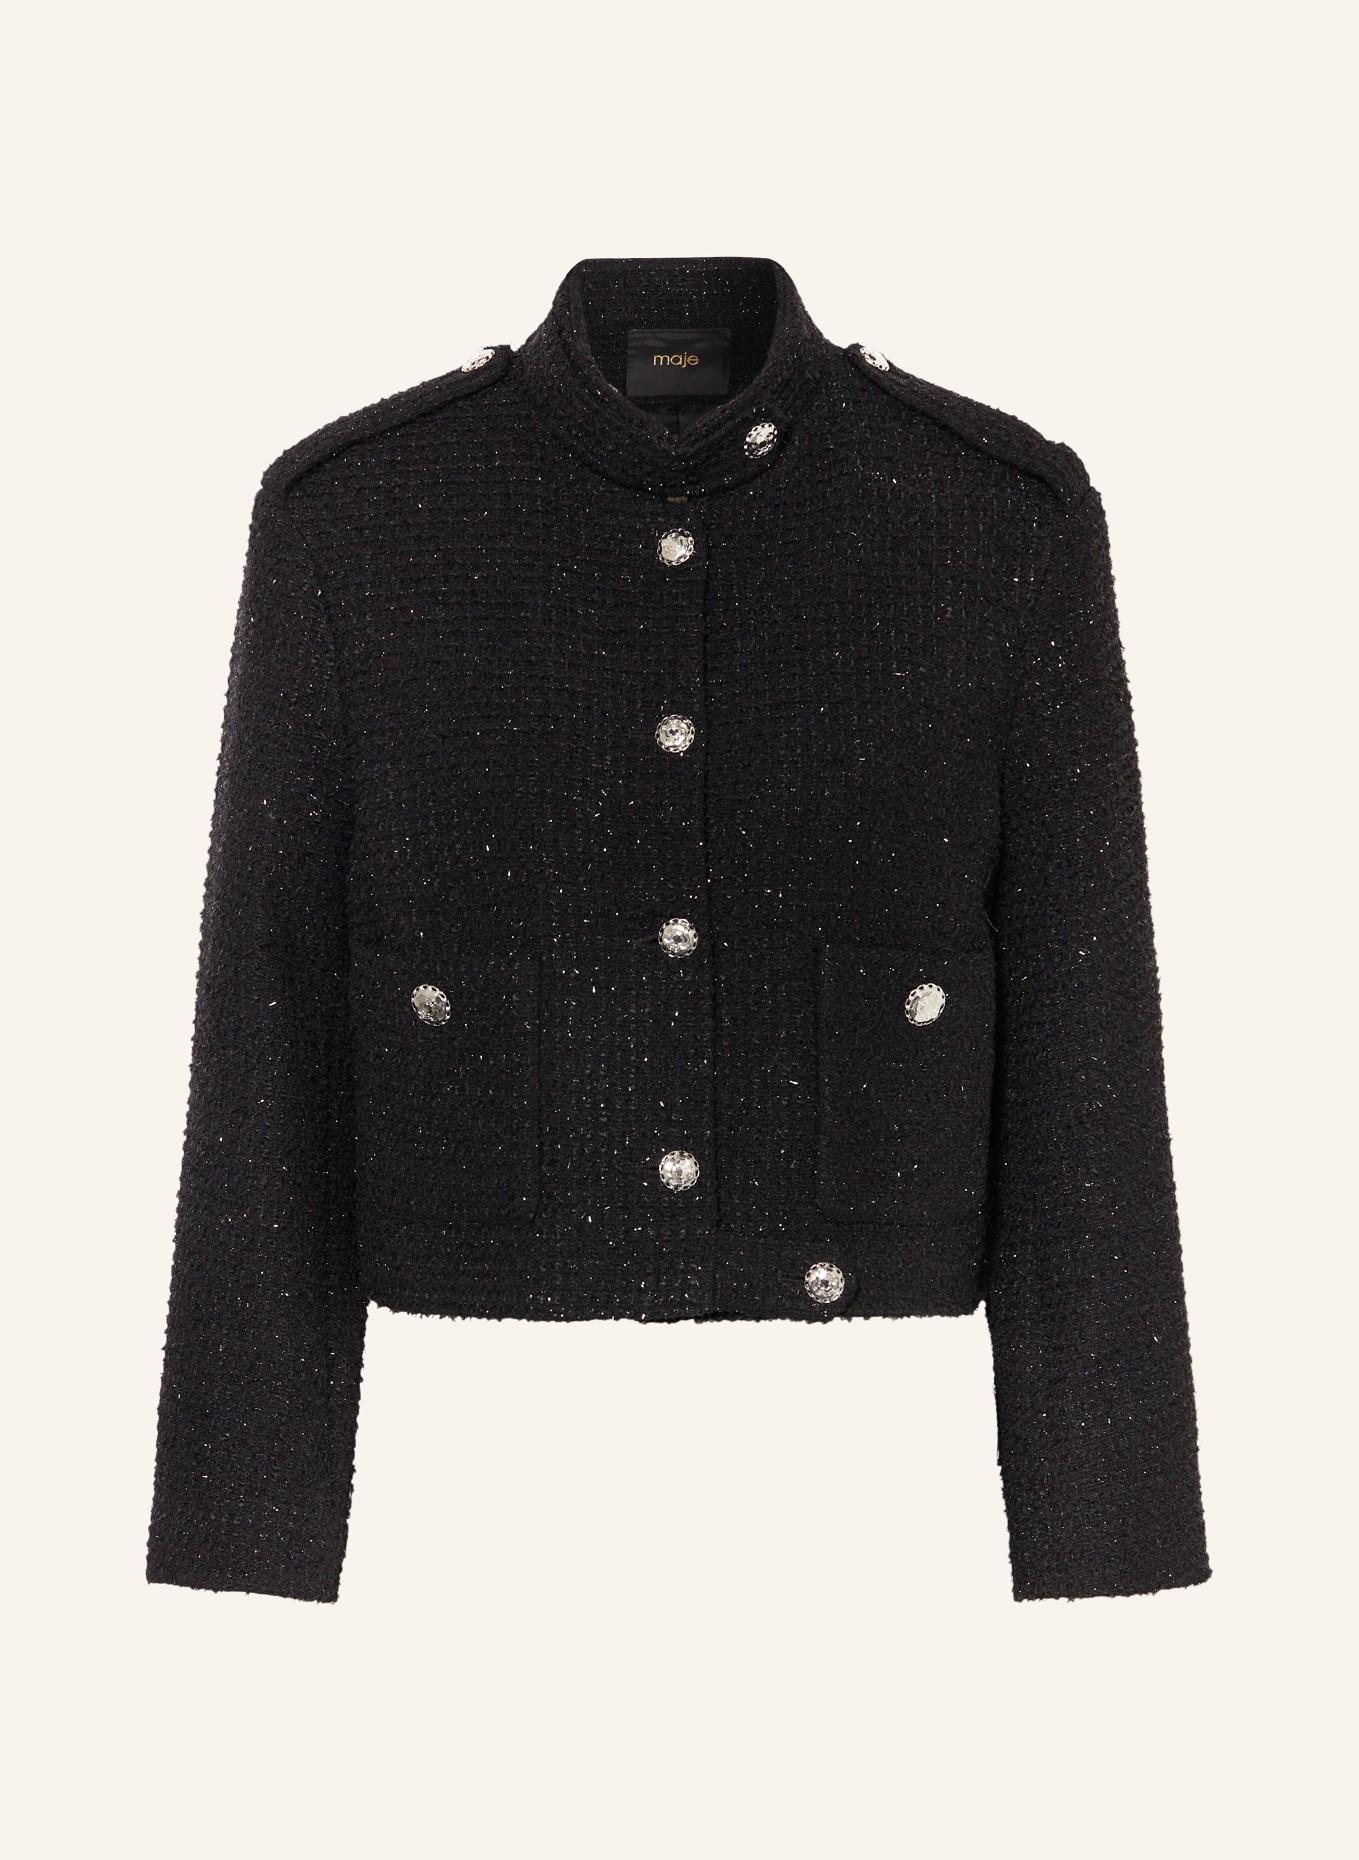 maje Tweed-Jacke mit Glitzergarn, Farbe: SCHWARZ (Bild 1)